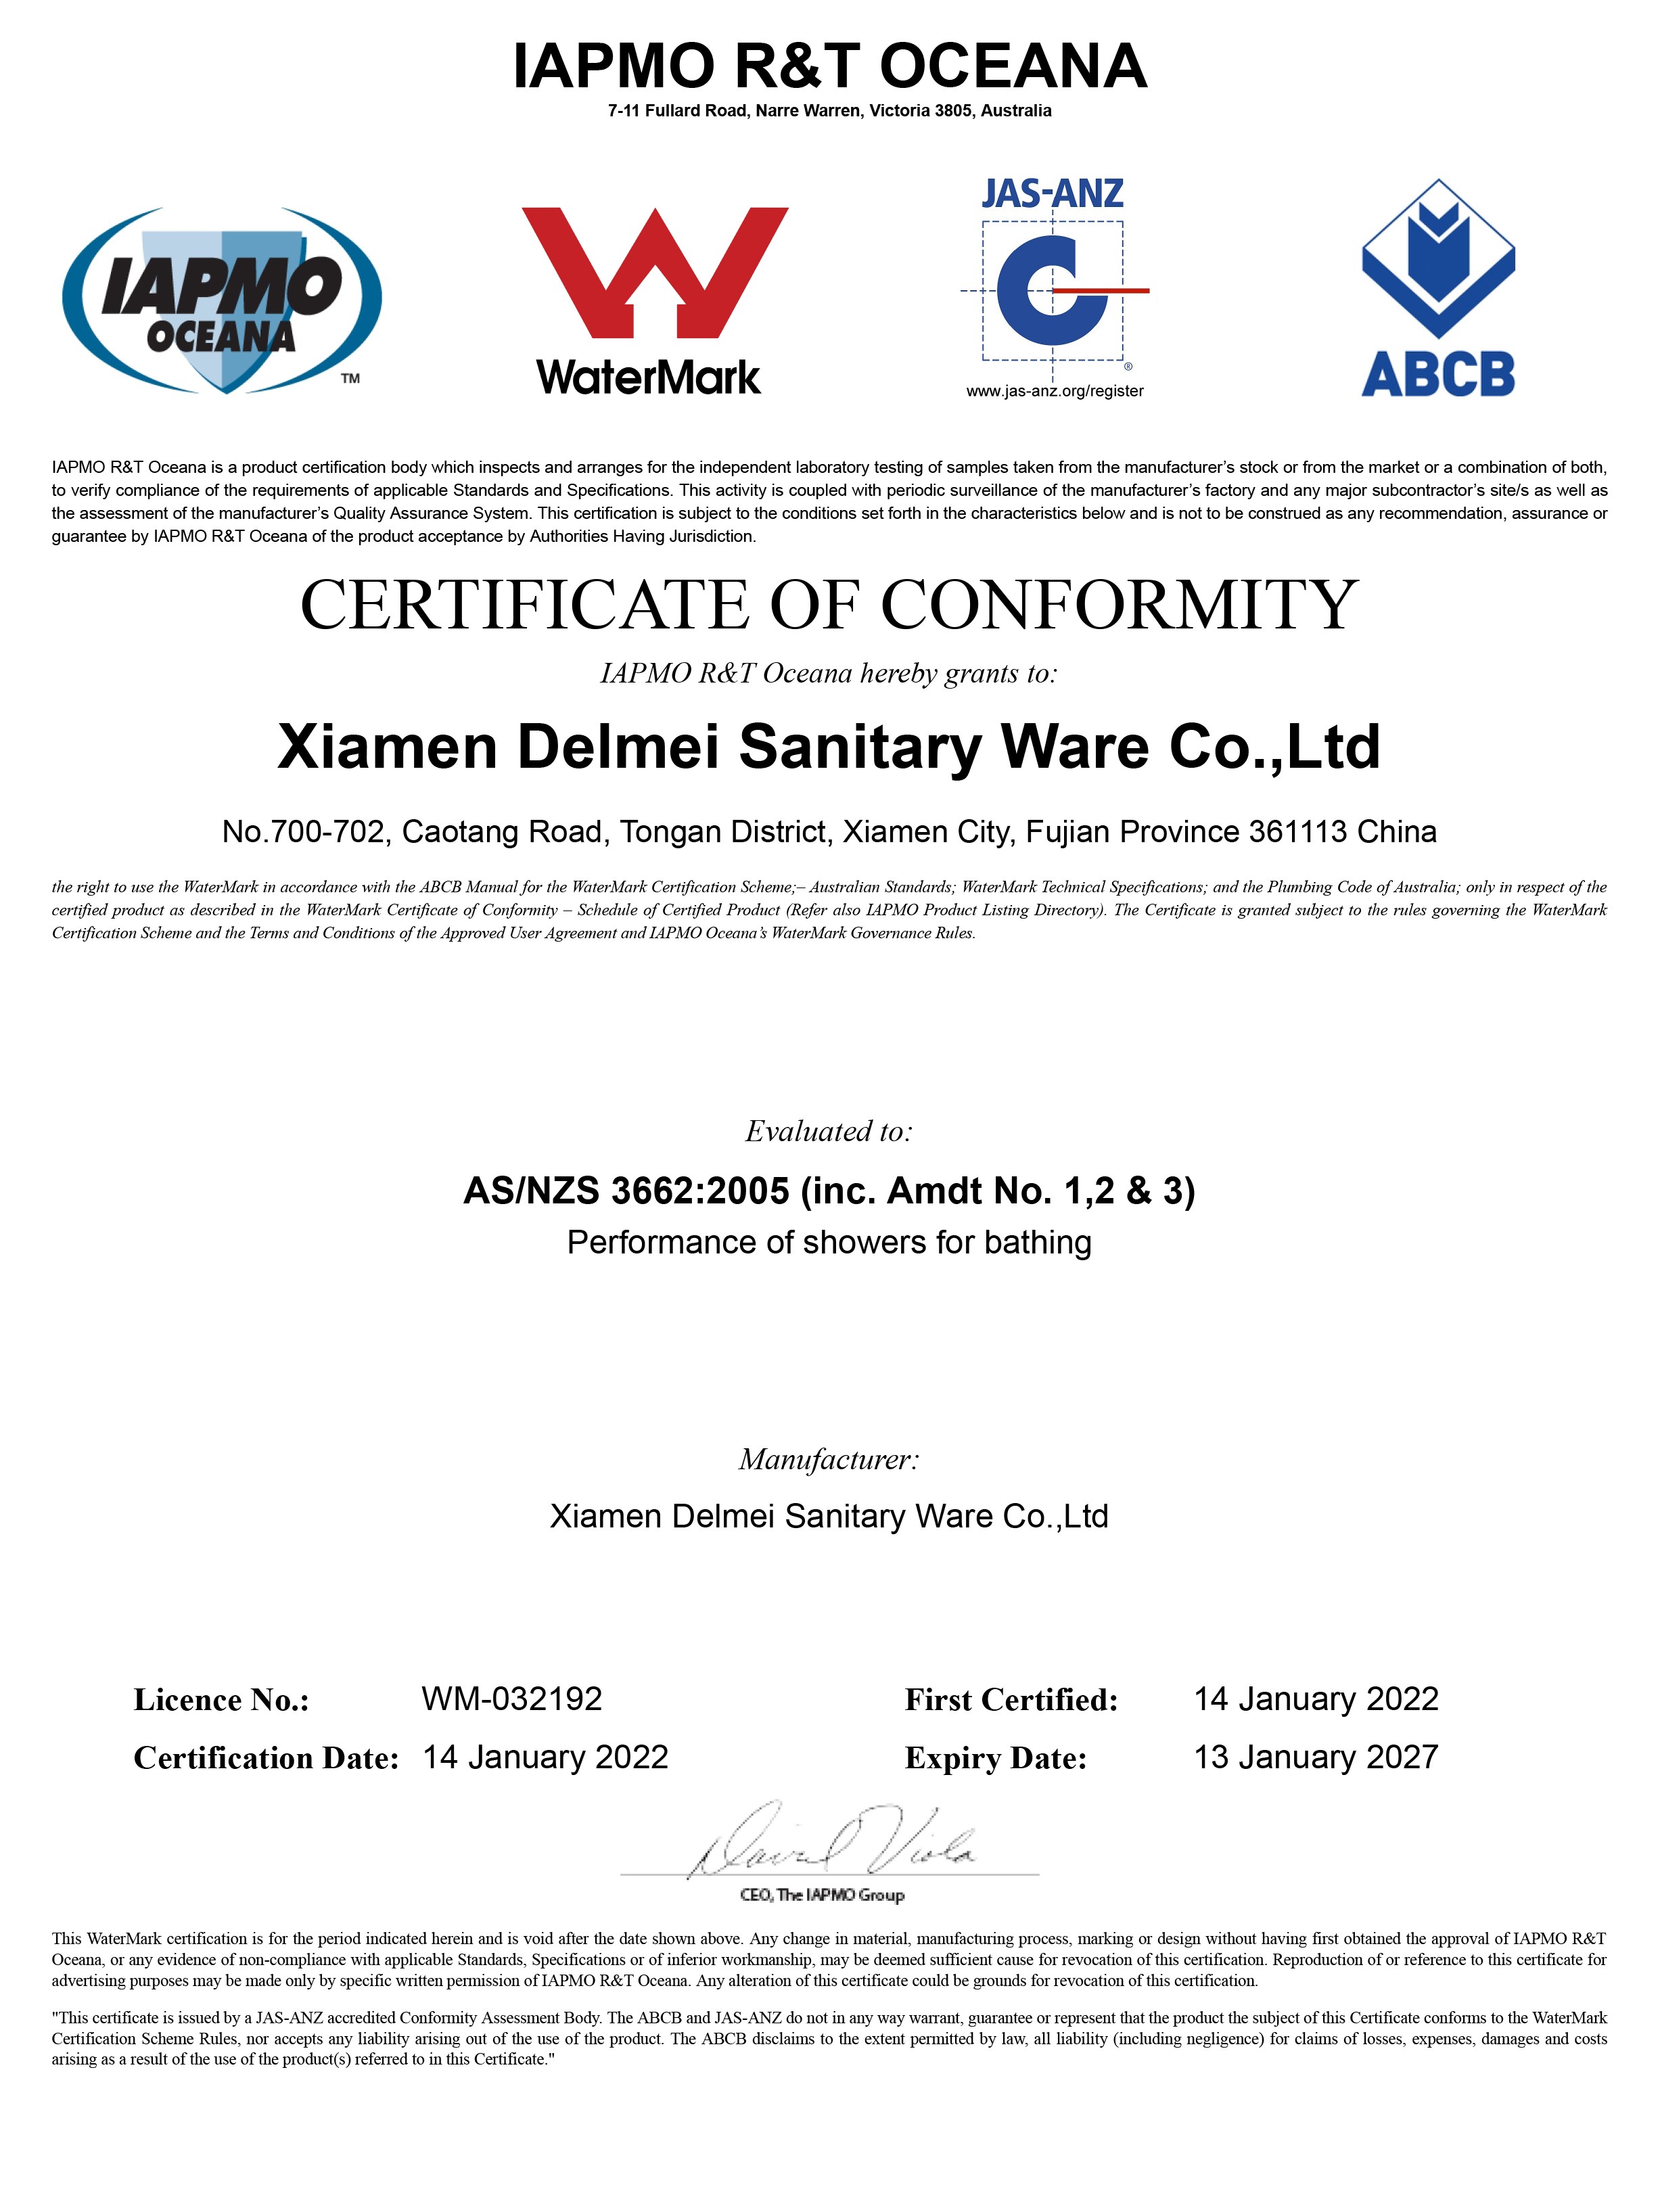 WM certification